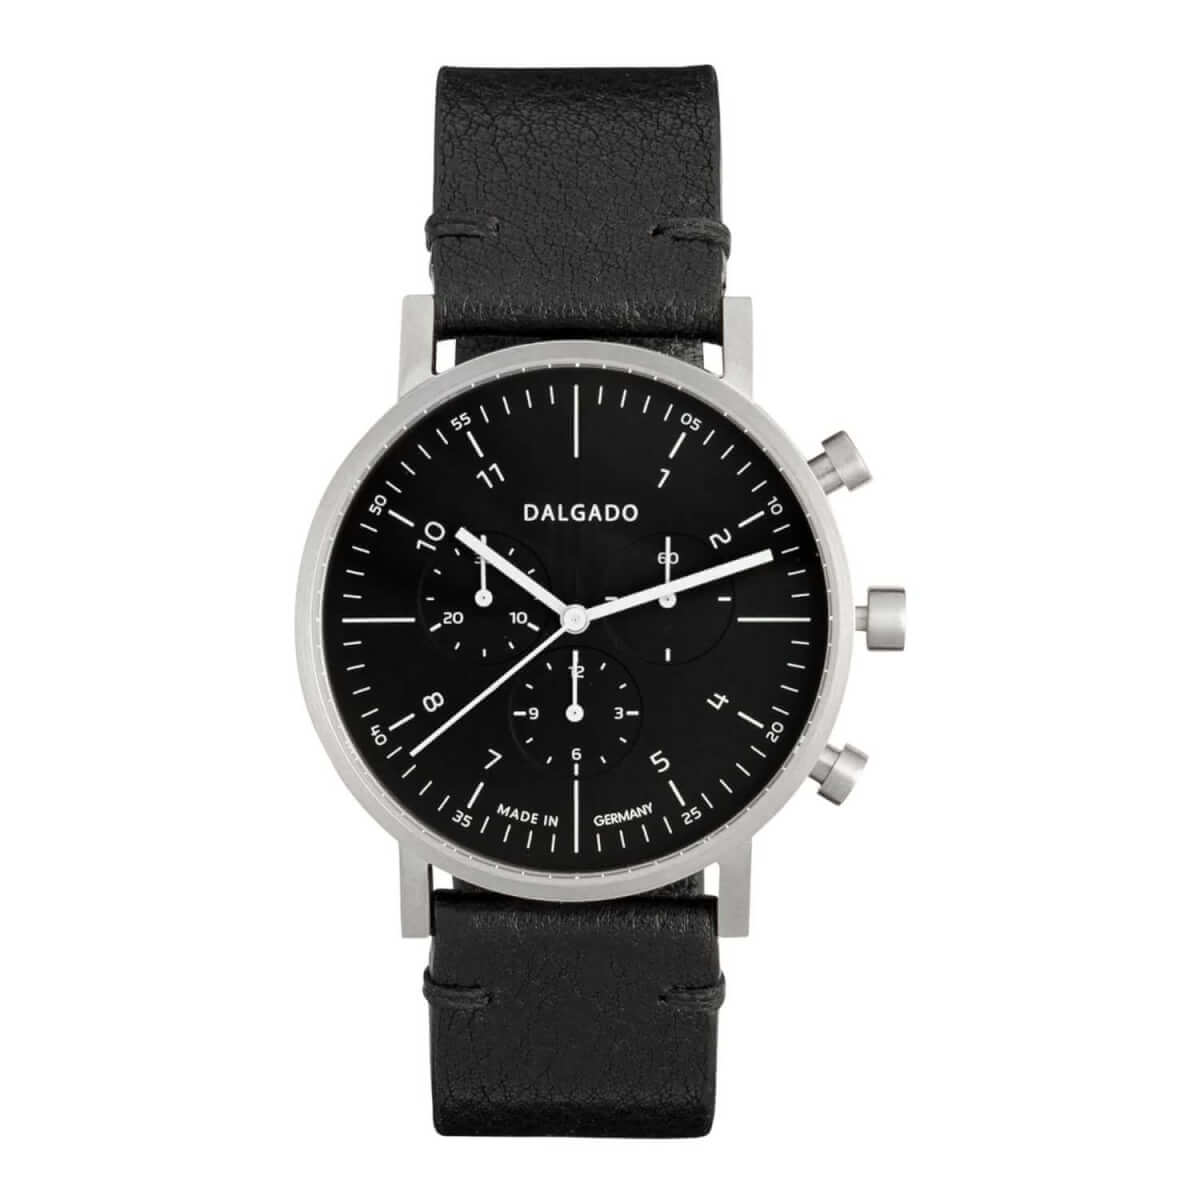 Black dial chronograph watch on black strap